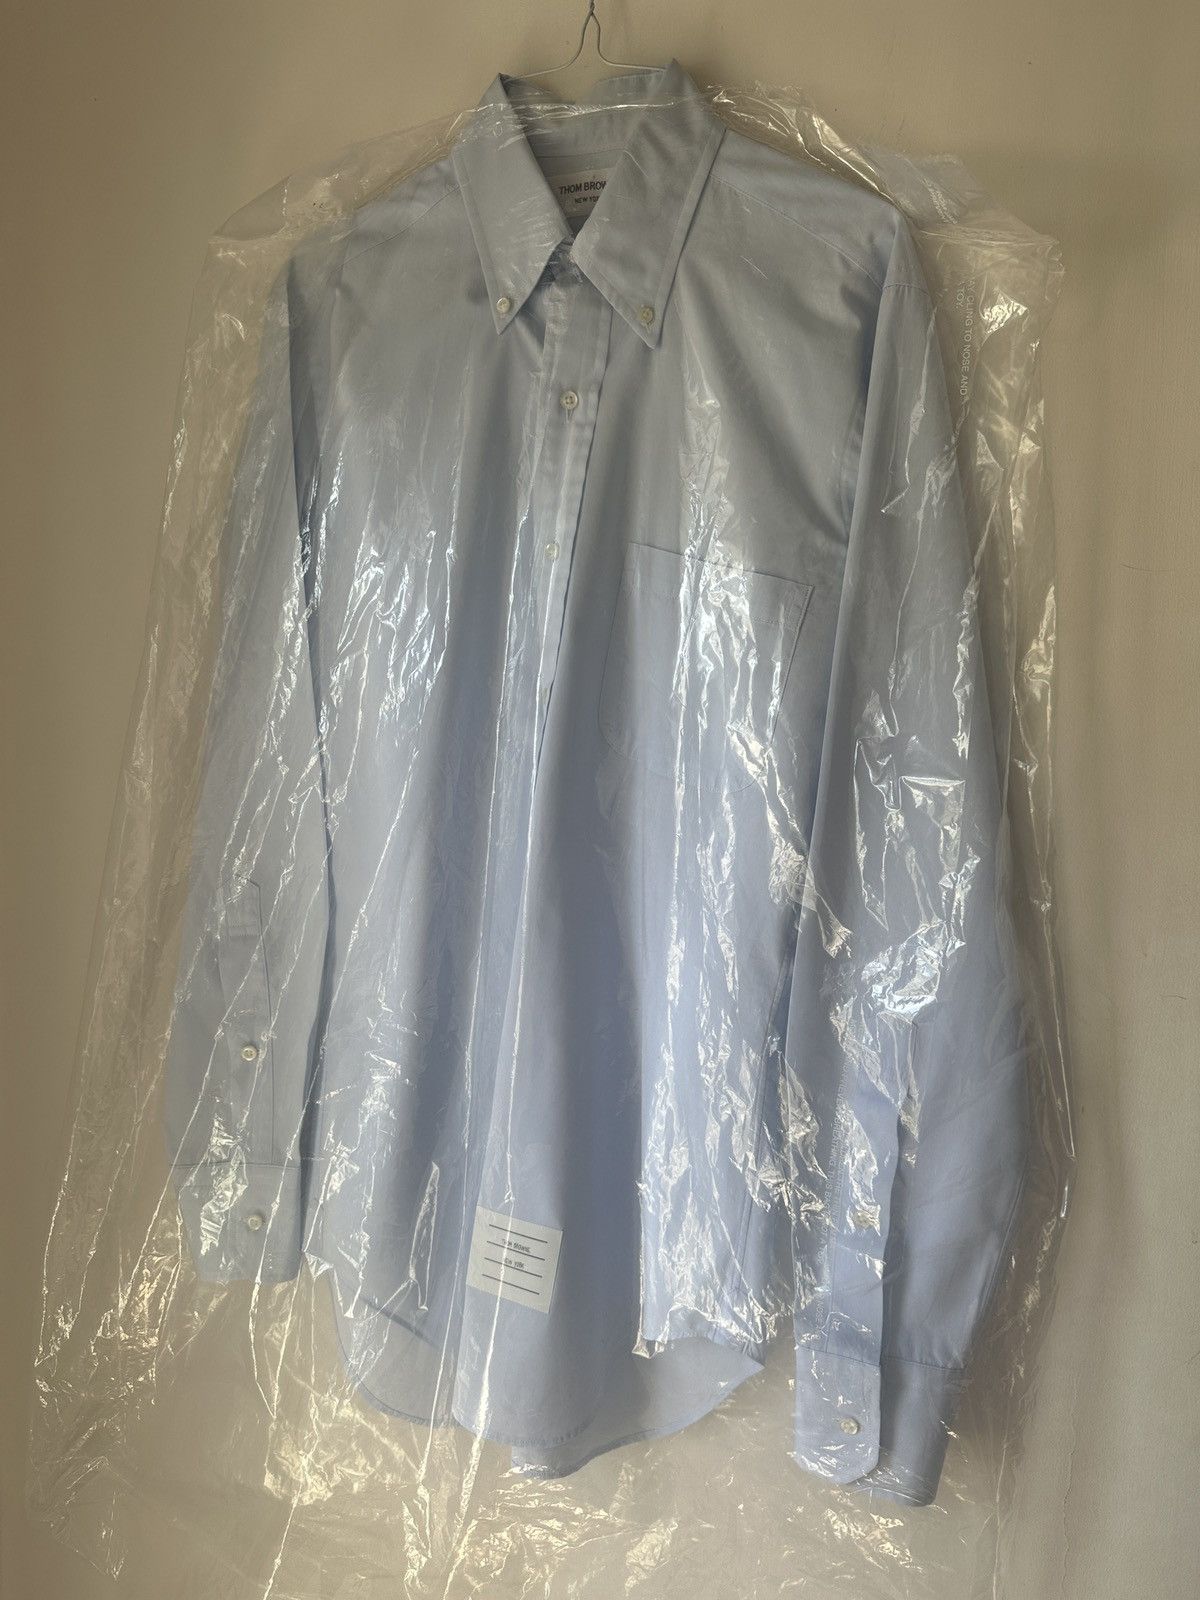 Thom Browne Light Blue Dress Shirt Size 1 - 5